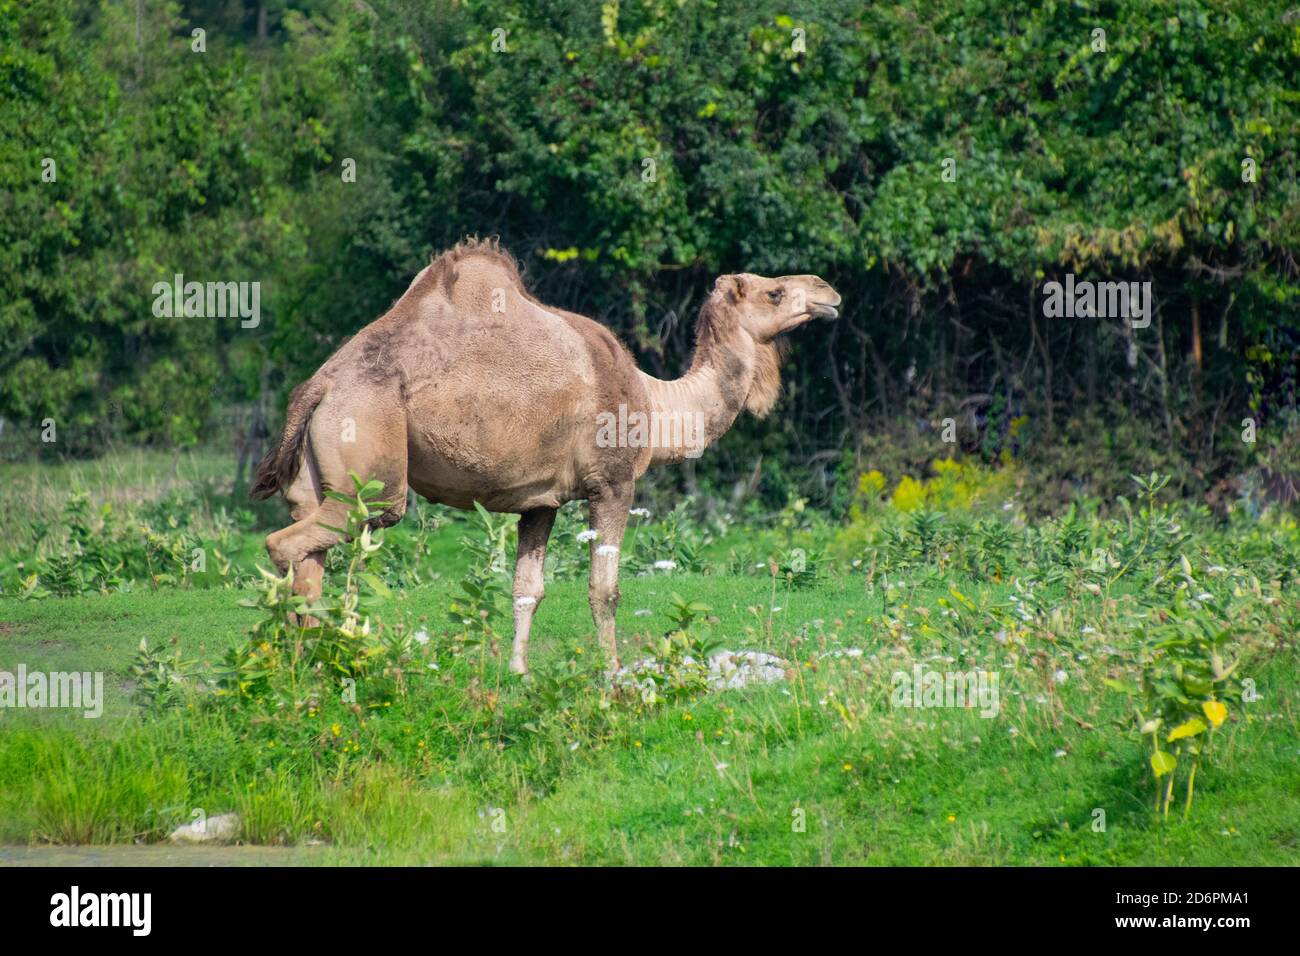 An Arabian Camel. Stock Photo